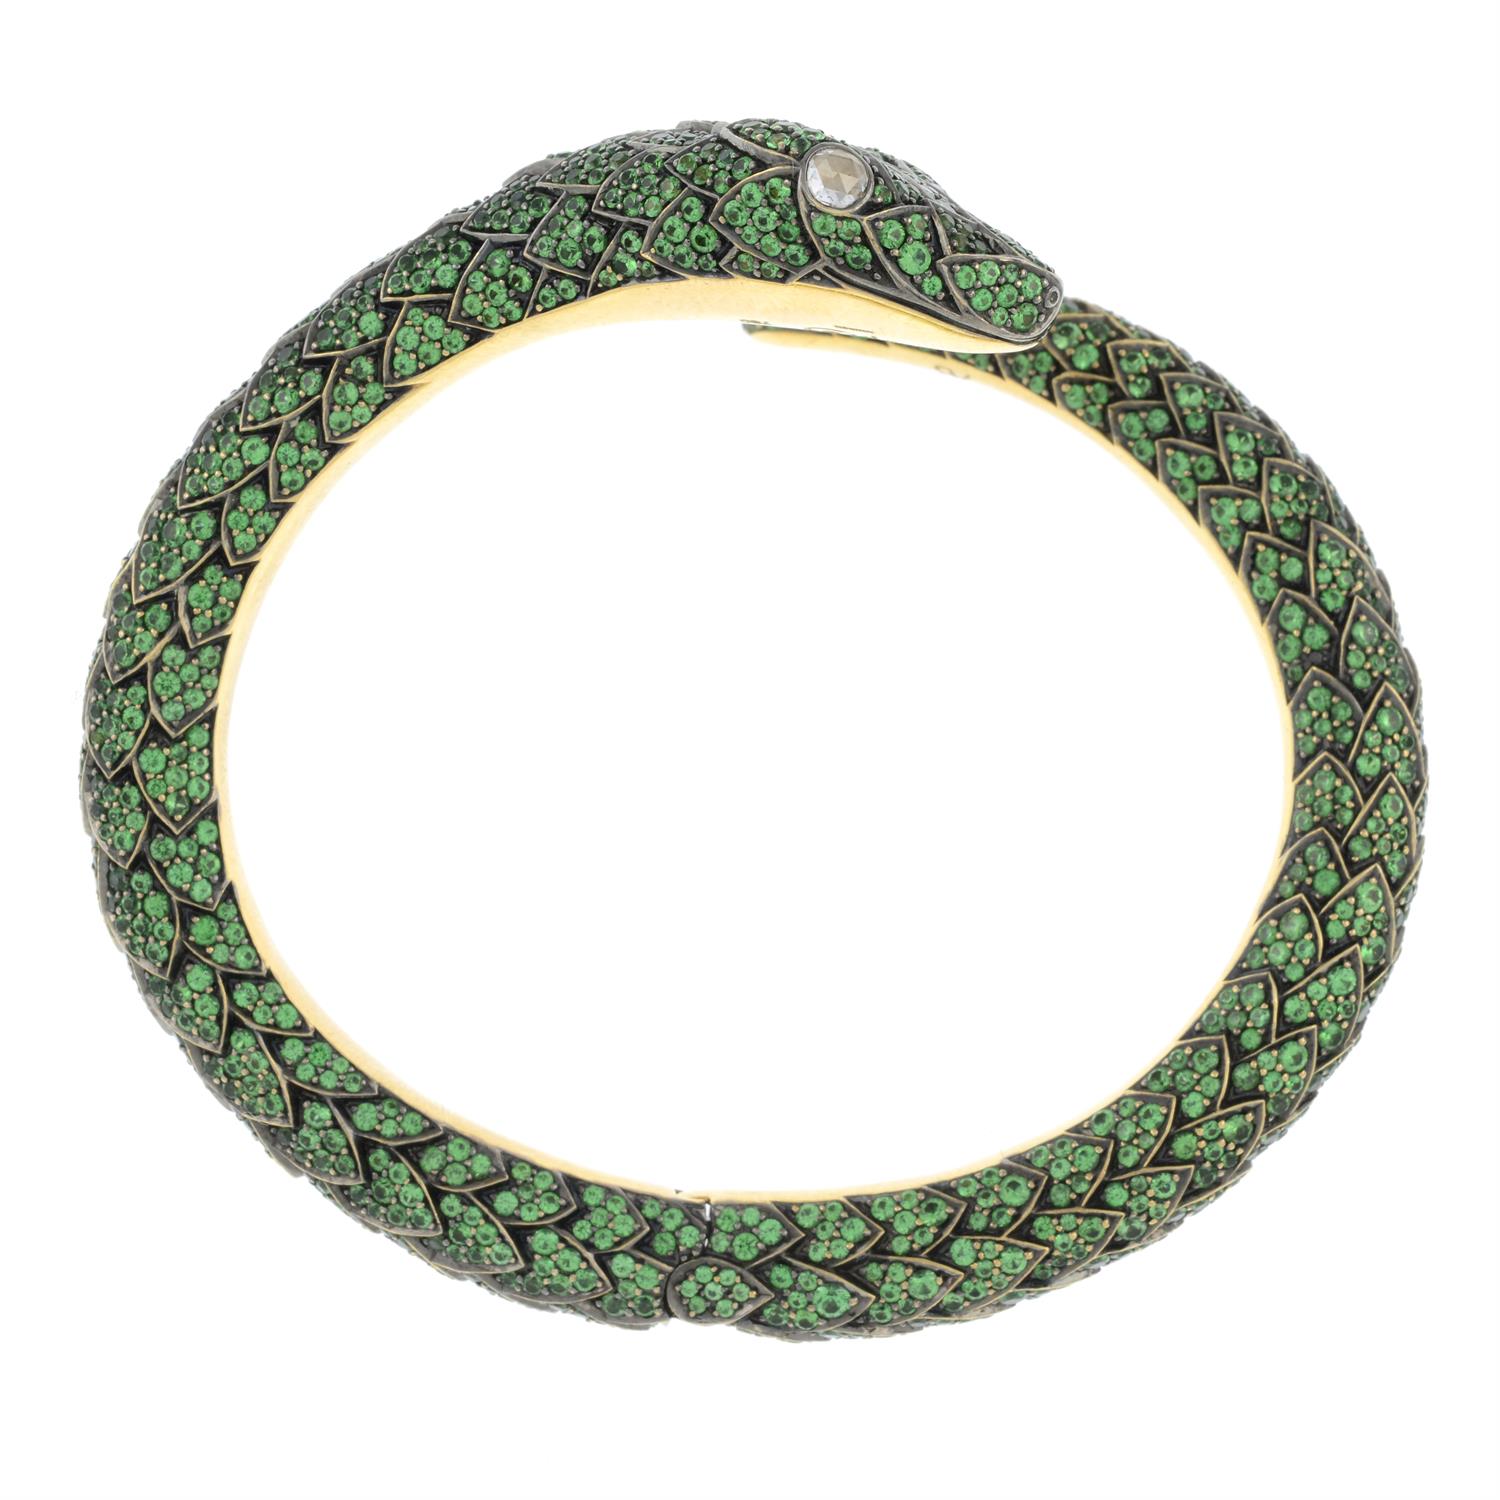 18ct gold gem 'Protector' snake bangle, by Asprey - Image 6 of 6